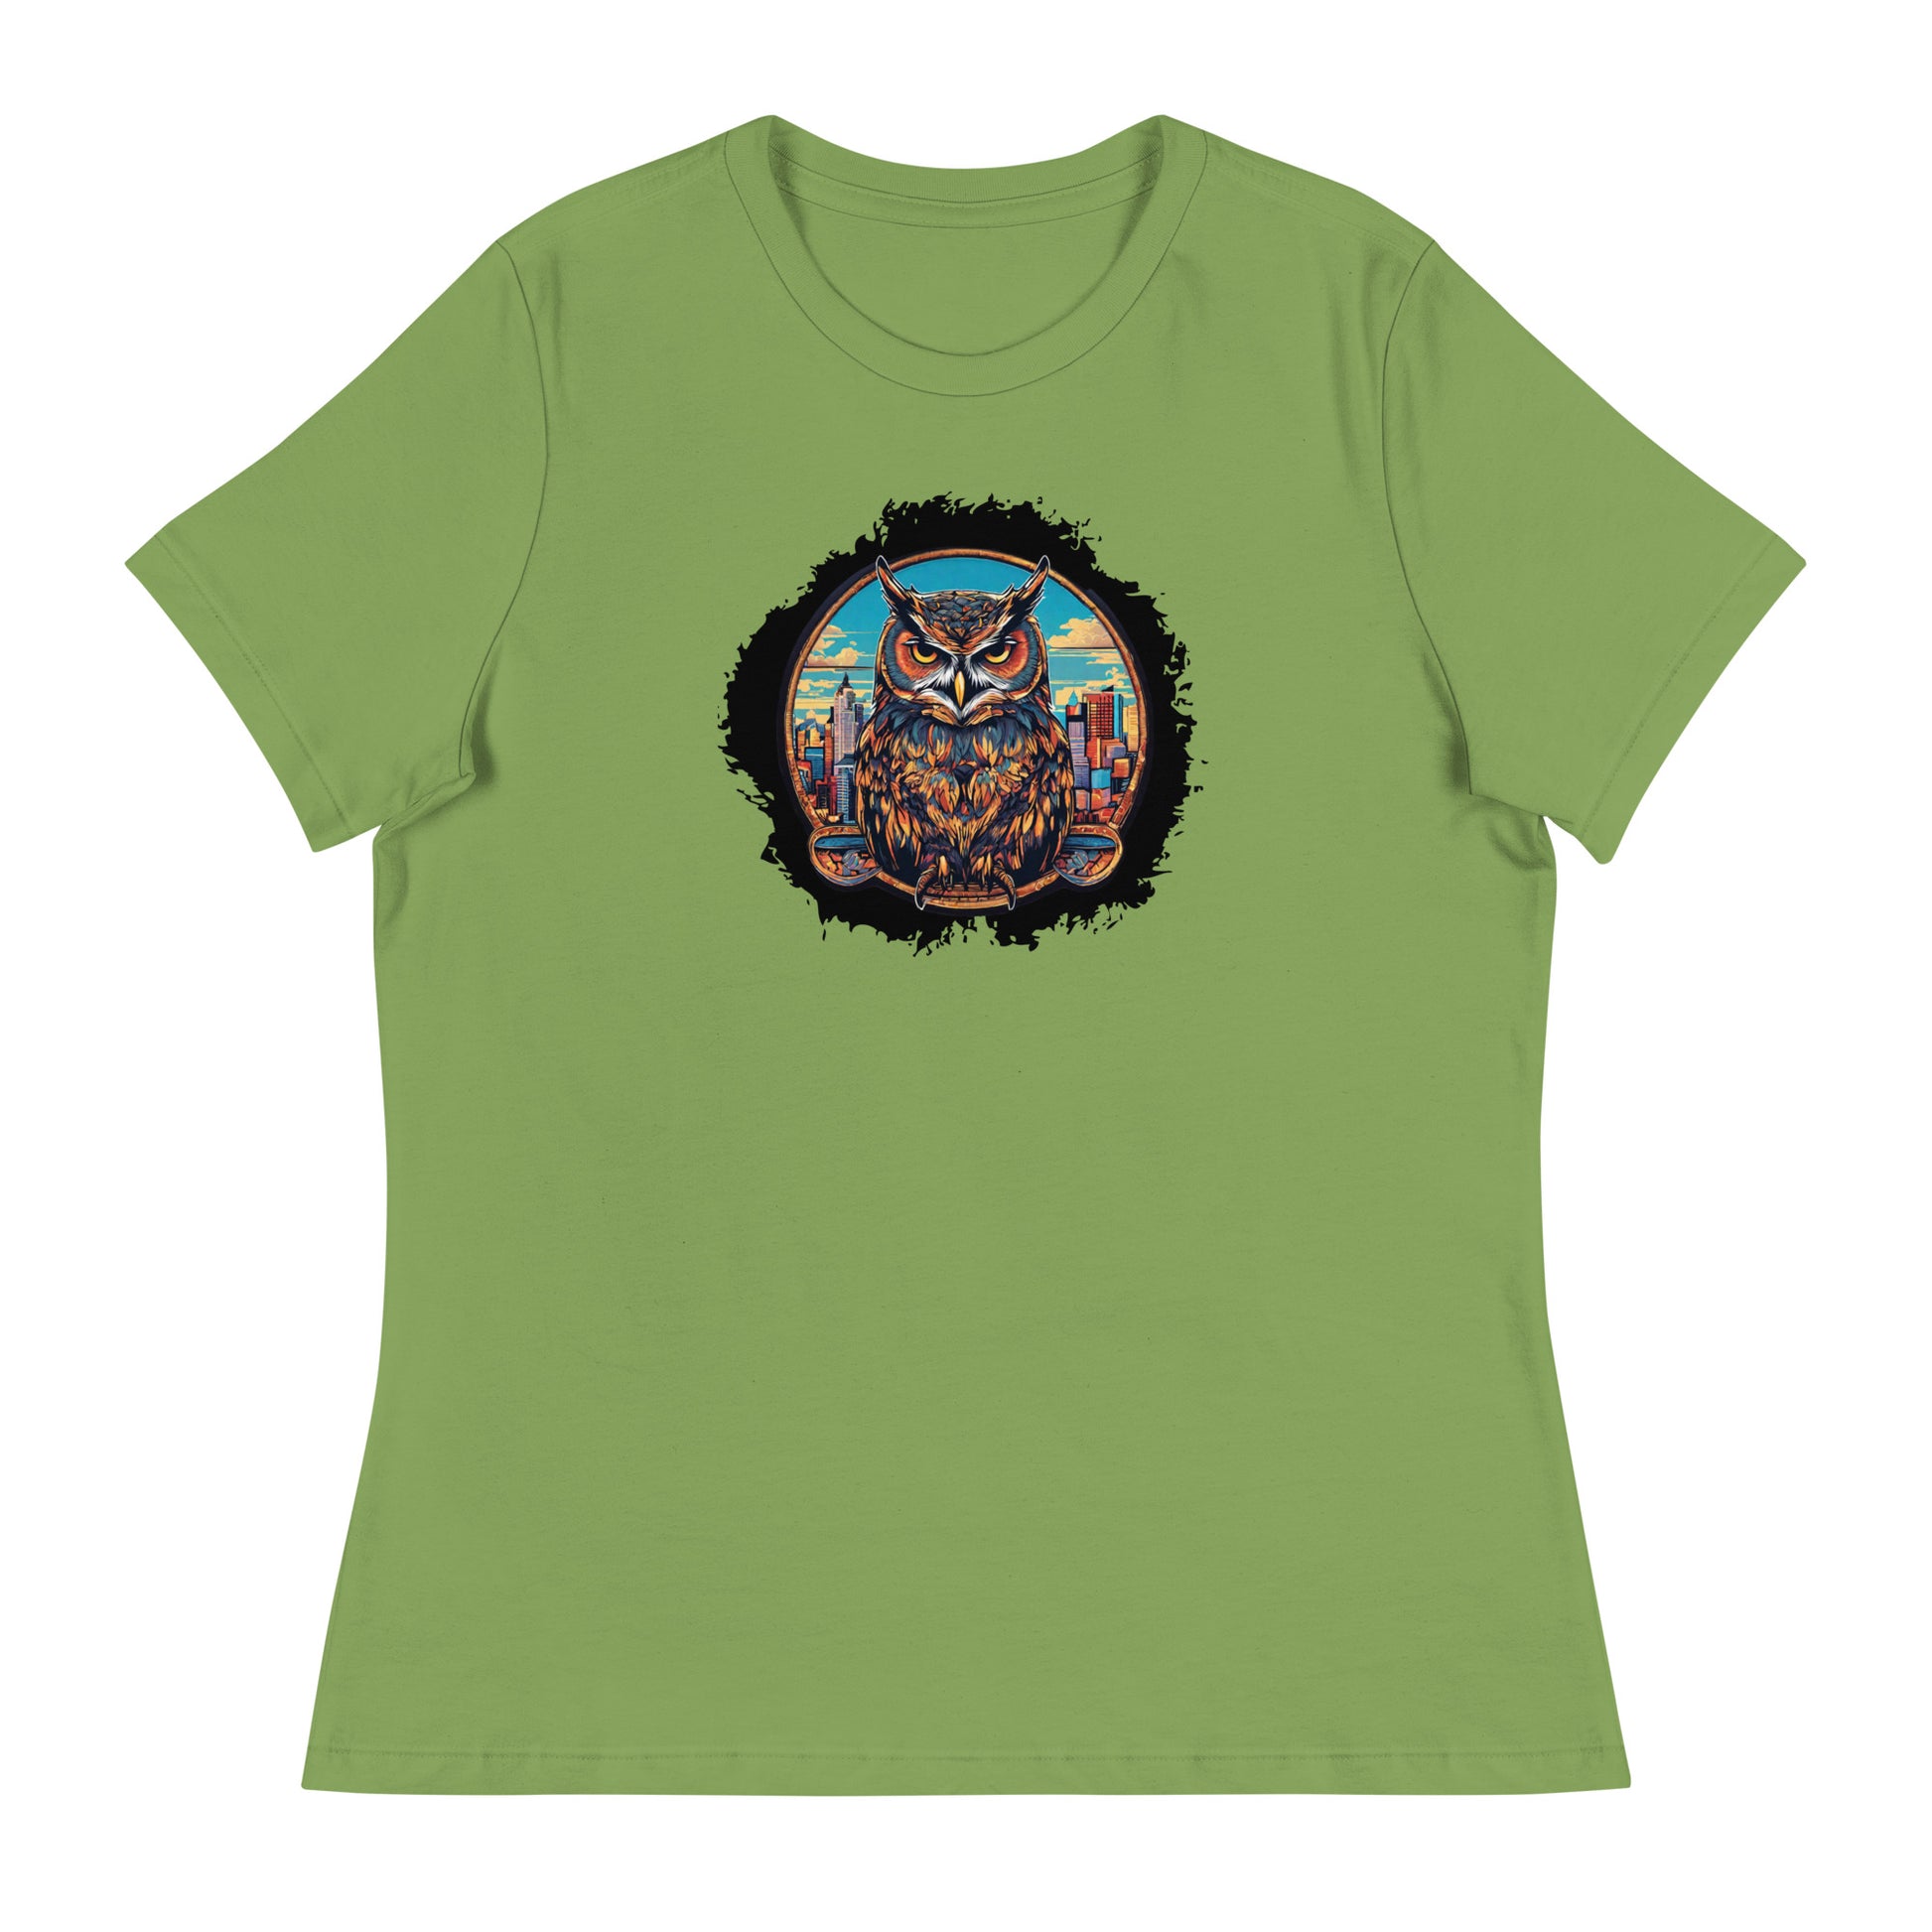 Owl in the City Emblem Women's T-Shirt Leaf